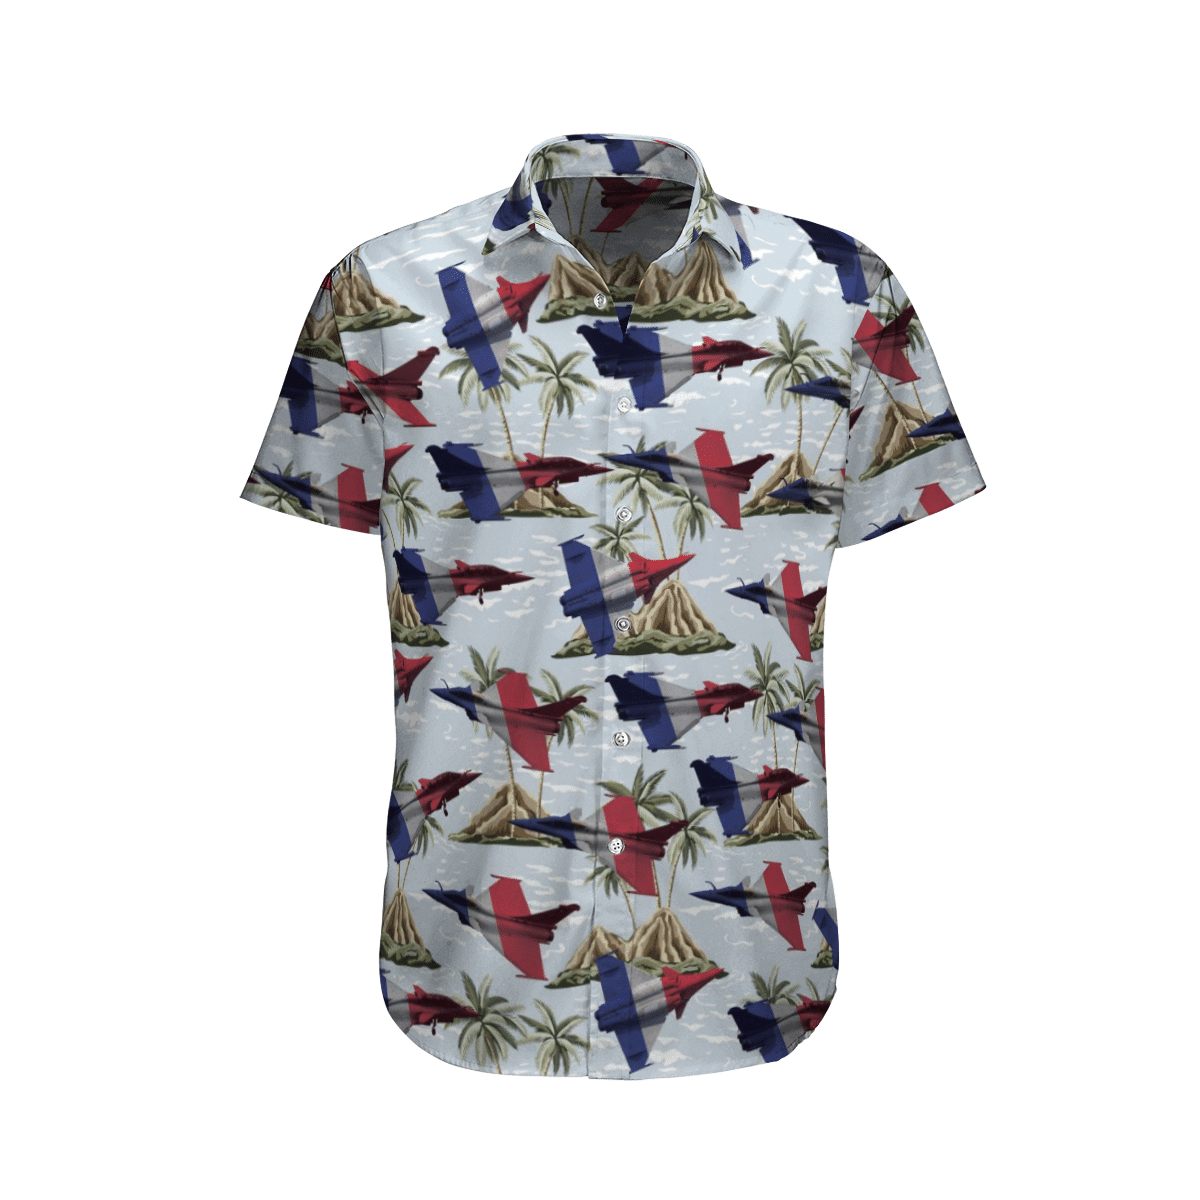 Enjoy your summer with top cool hawaiian shirt below 24